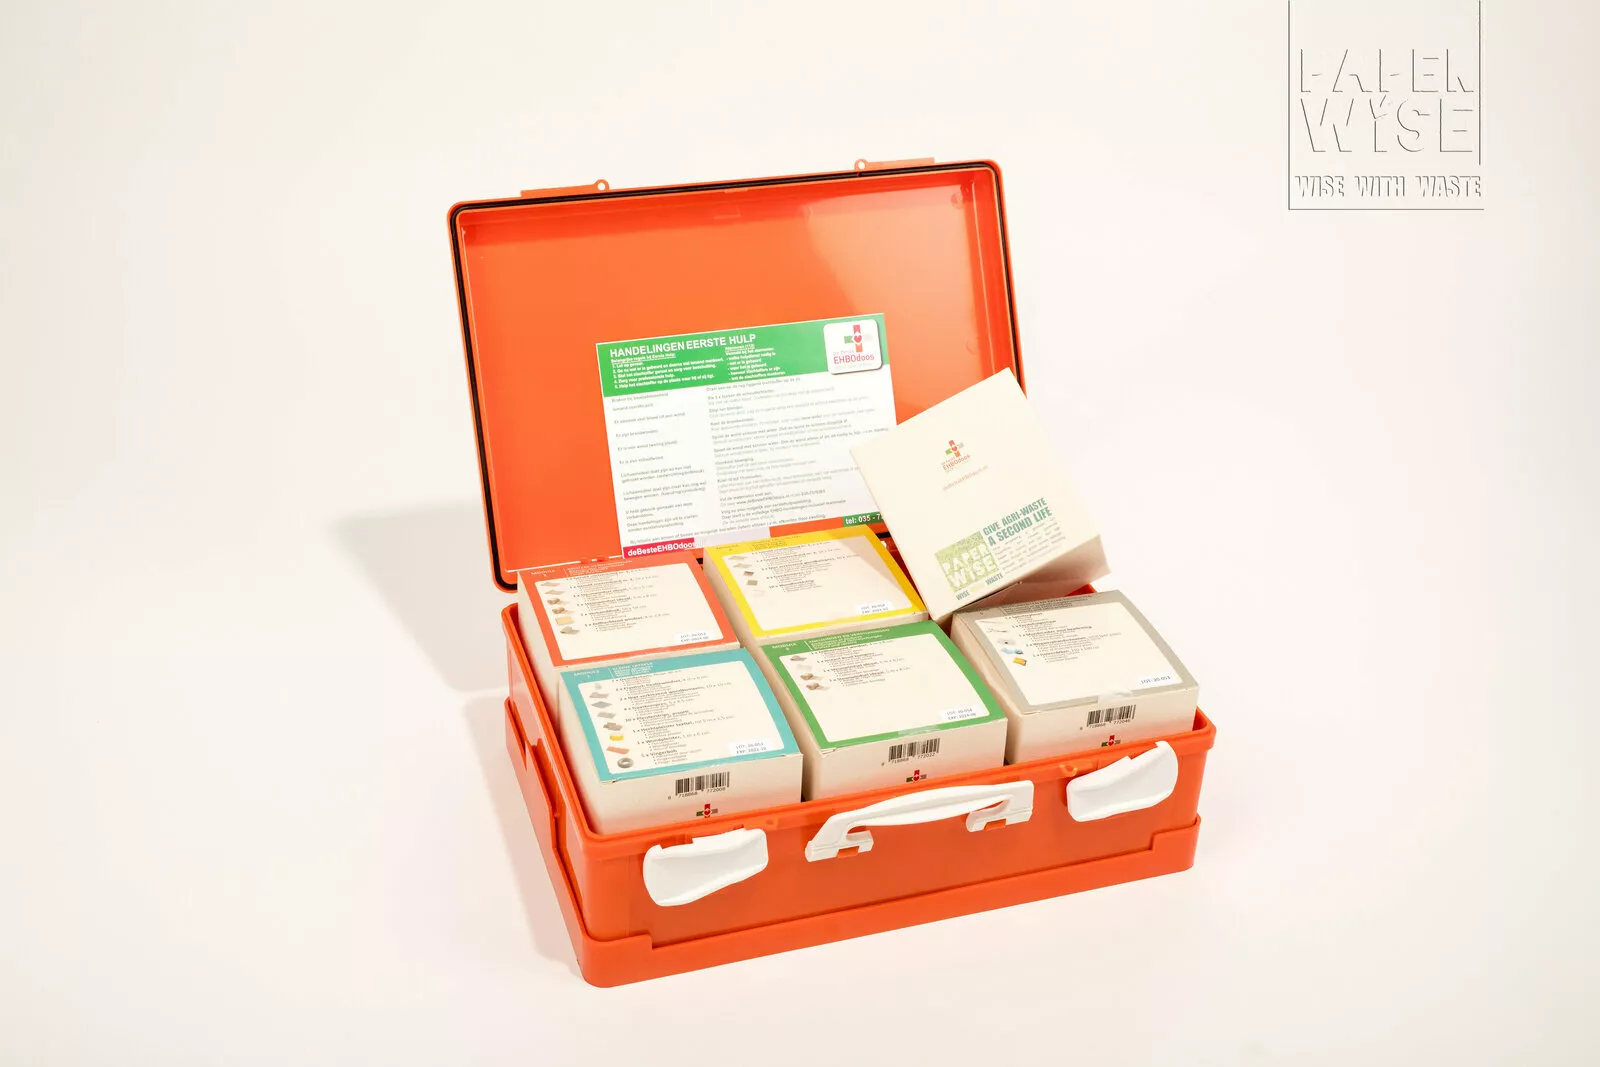 PaperWise environmentally friendly paper board packaging firstaidbox renewable resources DeBesteEHBODoos